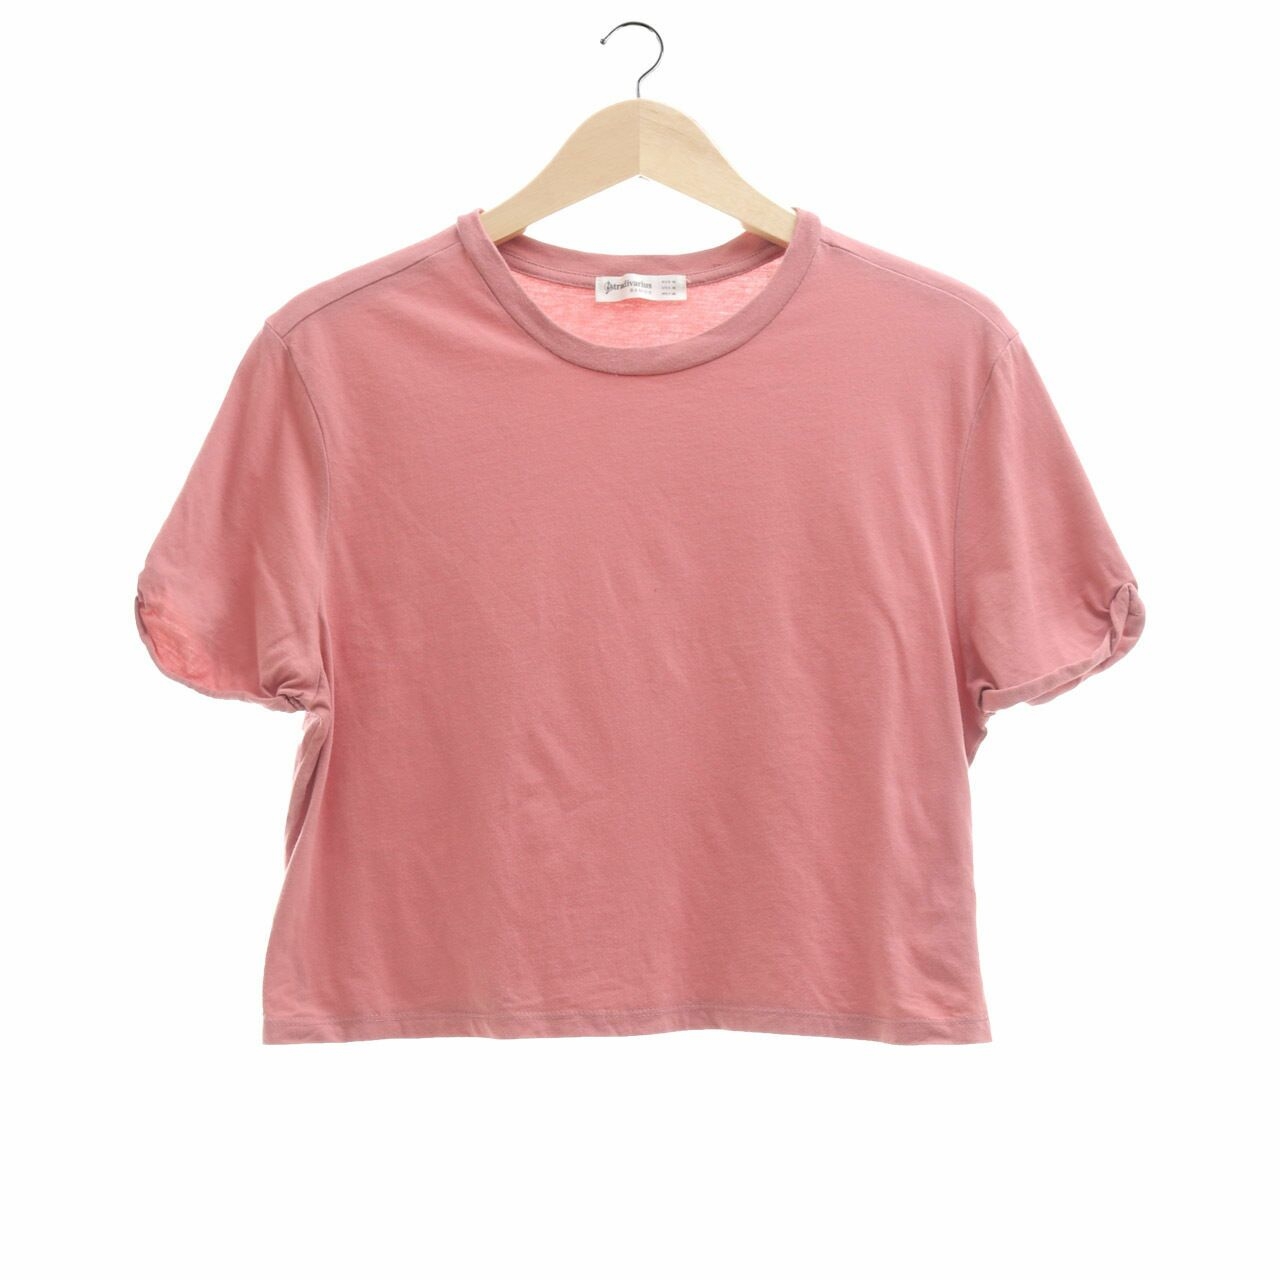 Stradivarius Dusty Pink T-Shirt